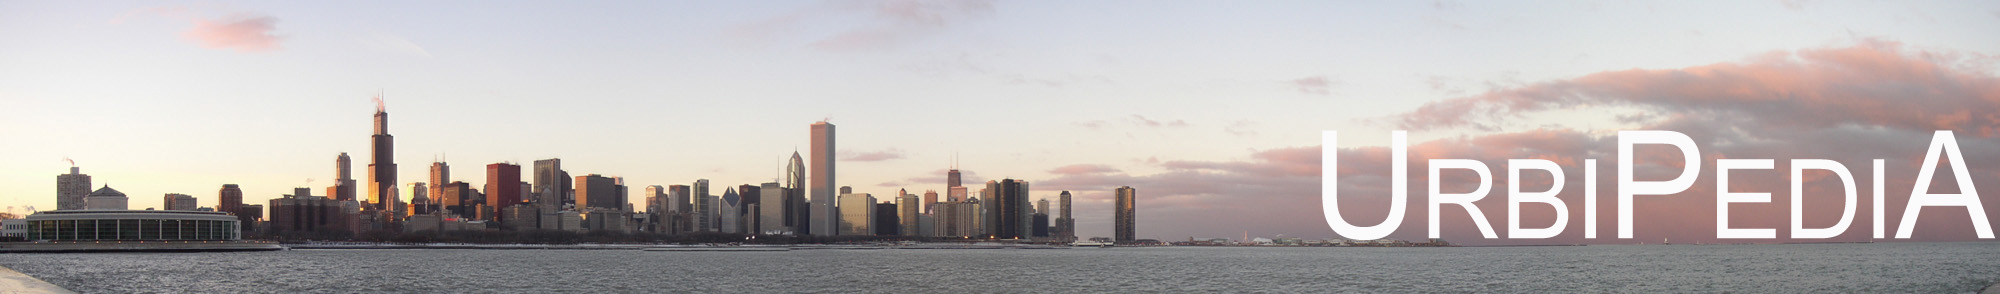 Chicago Skyline at Sunset.URBIPEDIA.1.jpg